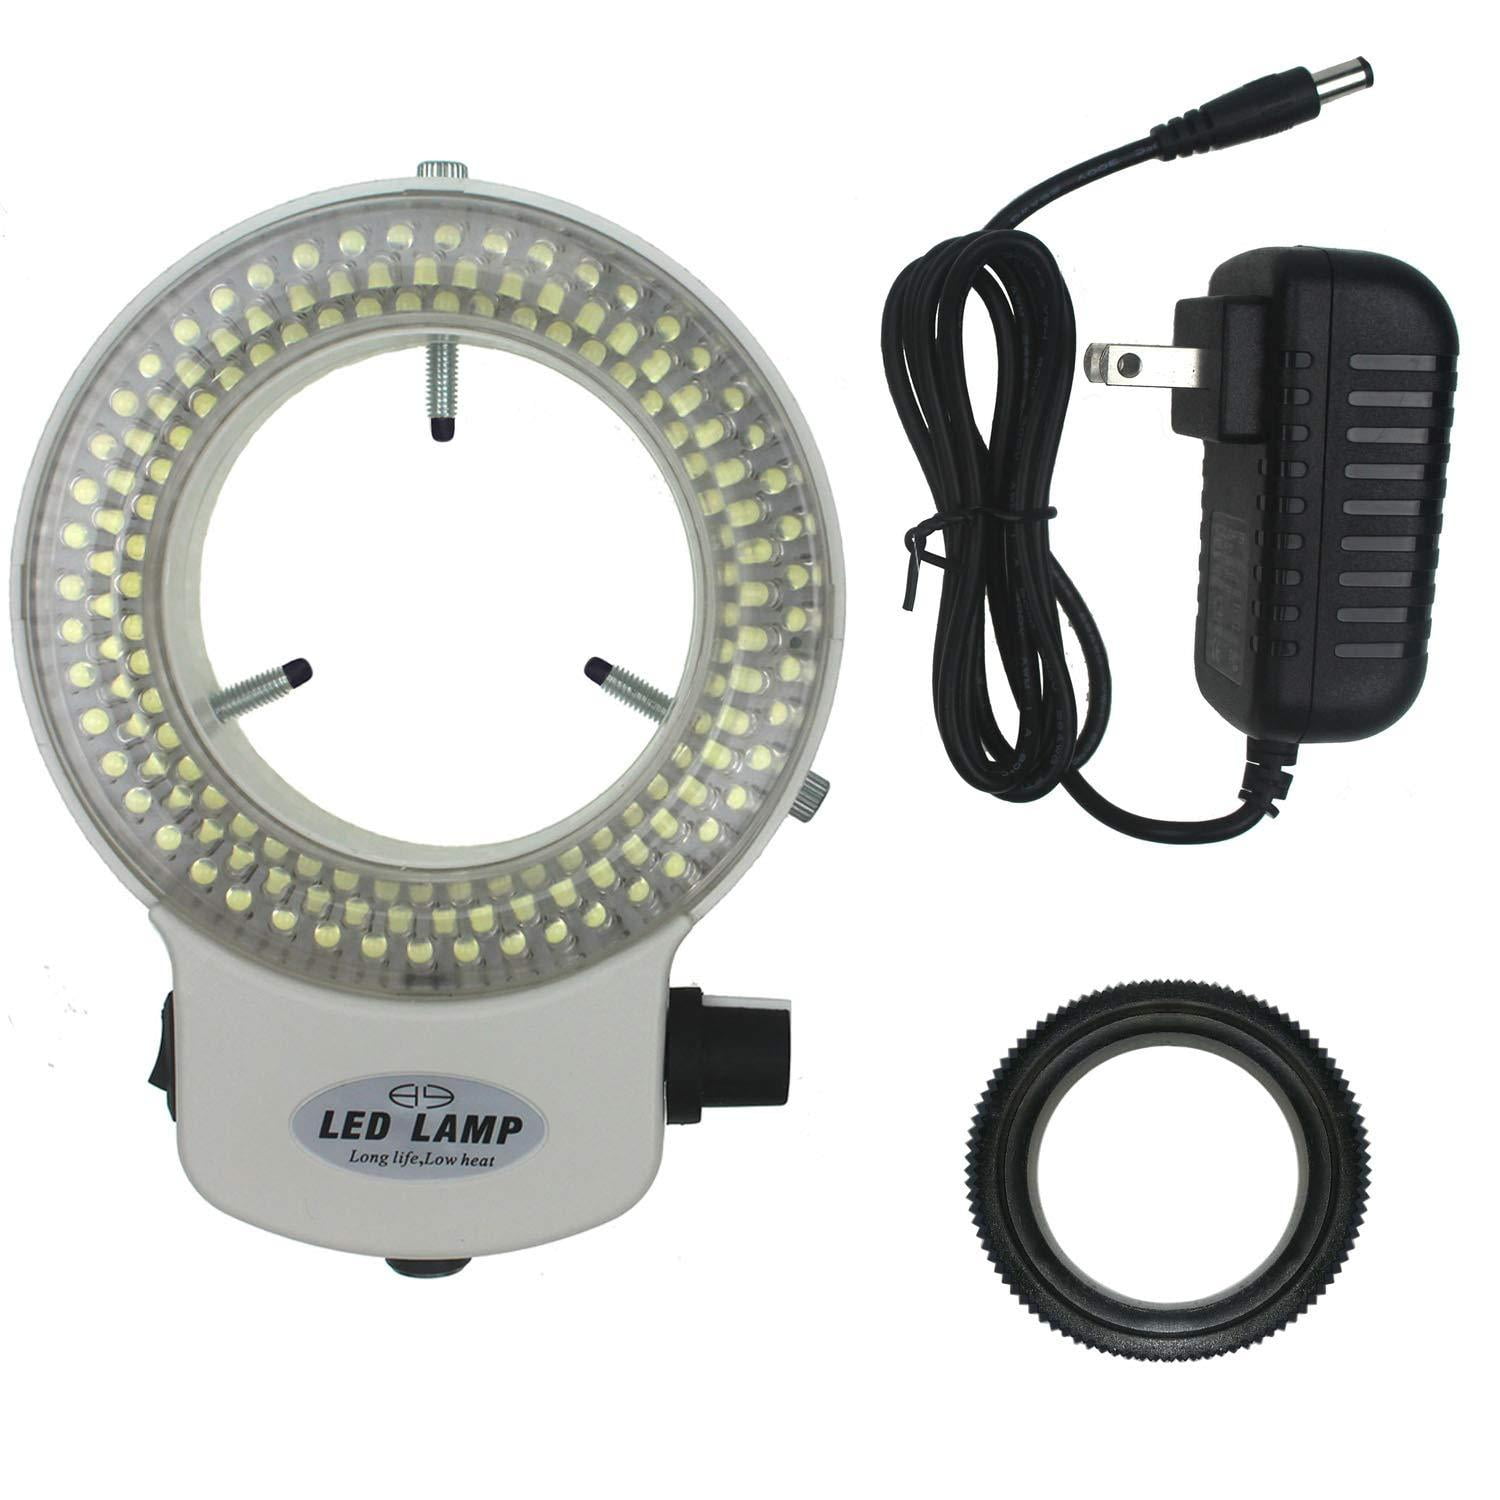 with Power Adapter Adjustable 144 LEDs Ring Light 100V 240V Lamp for Stereo Microscope & Camera Adjustable Brightness LED Ring Light